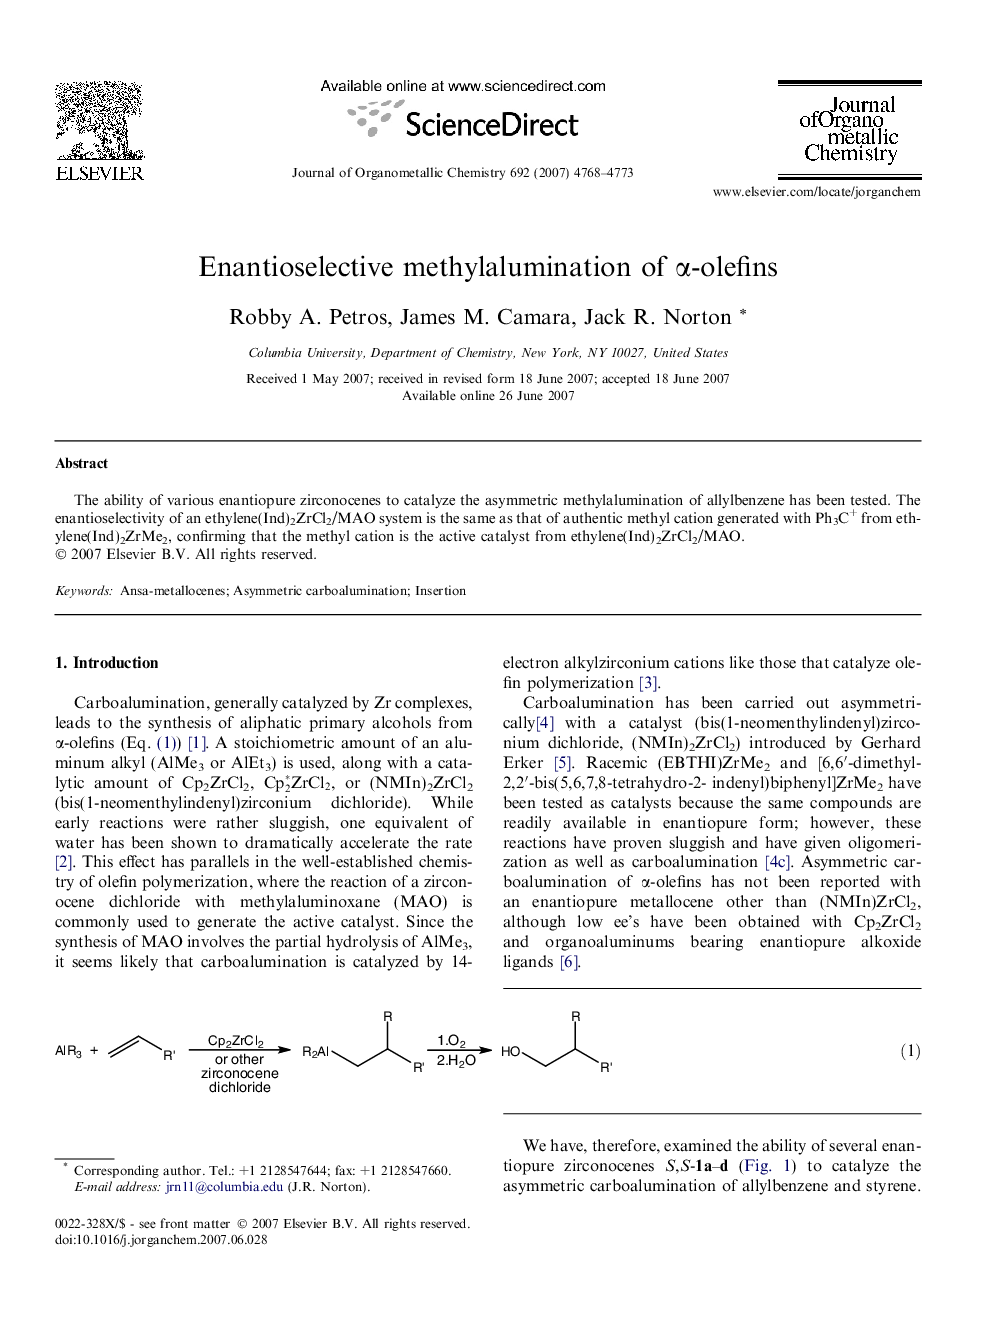 Enantioselective methylalumination of α-olefins